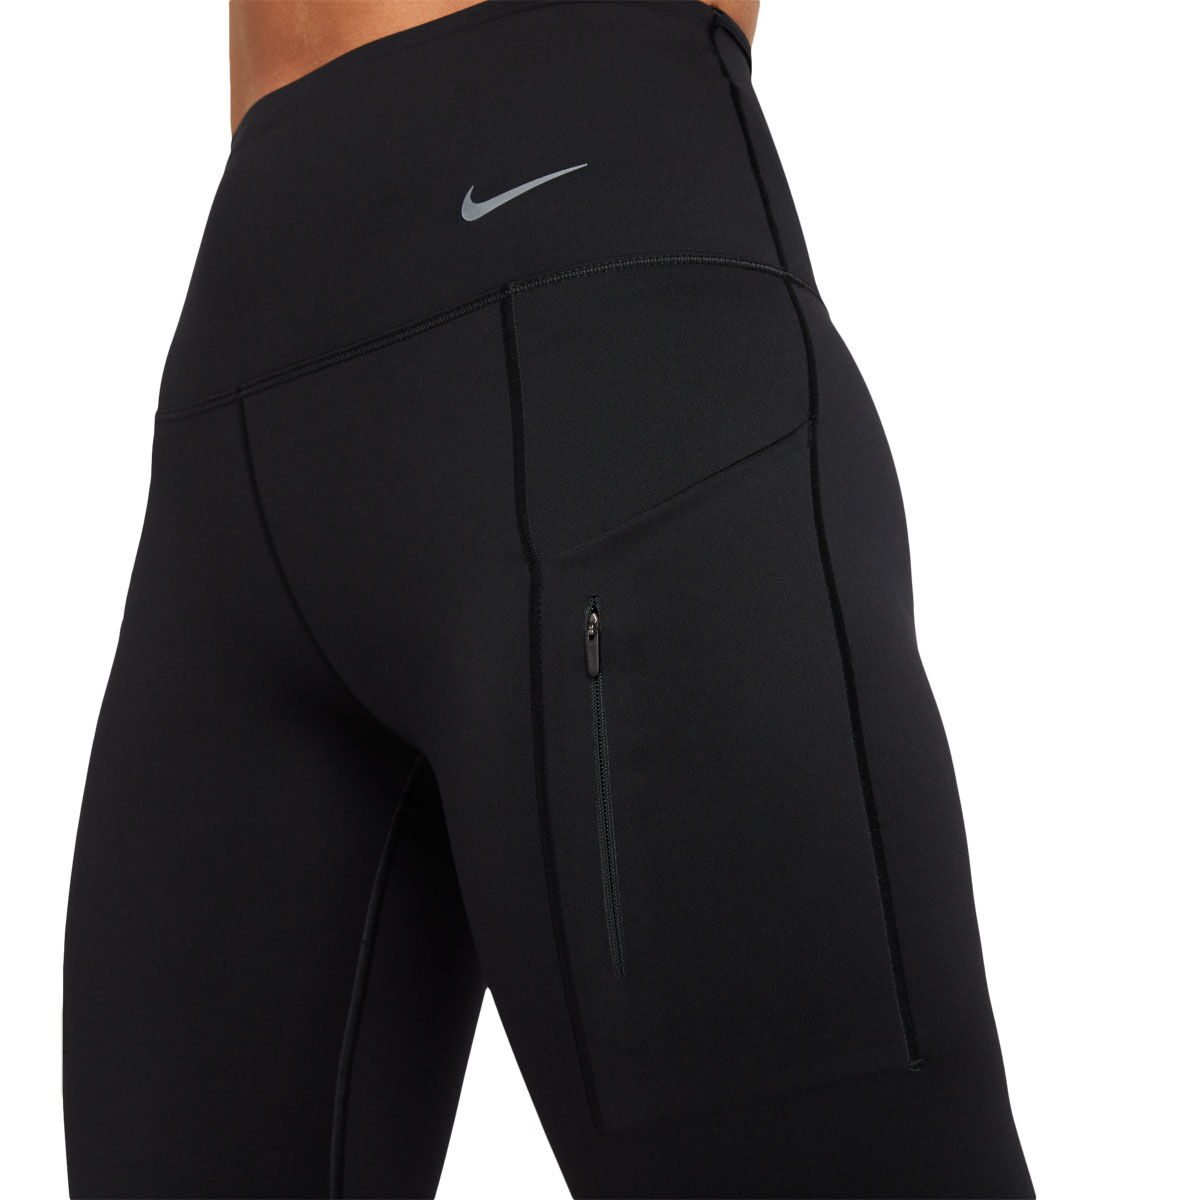 Nike Women's Running Capri Pants